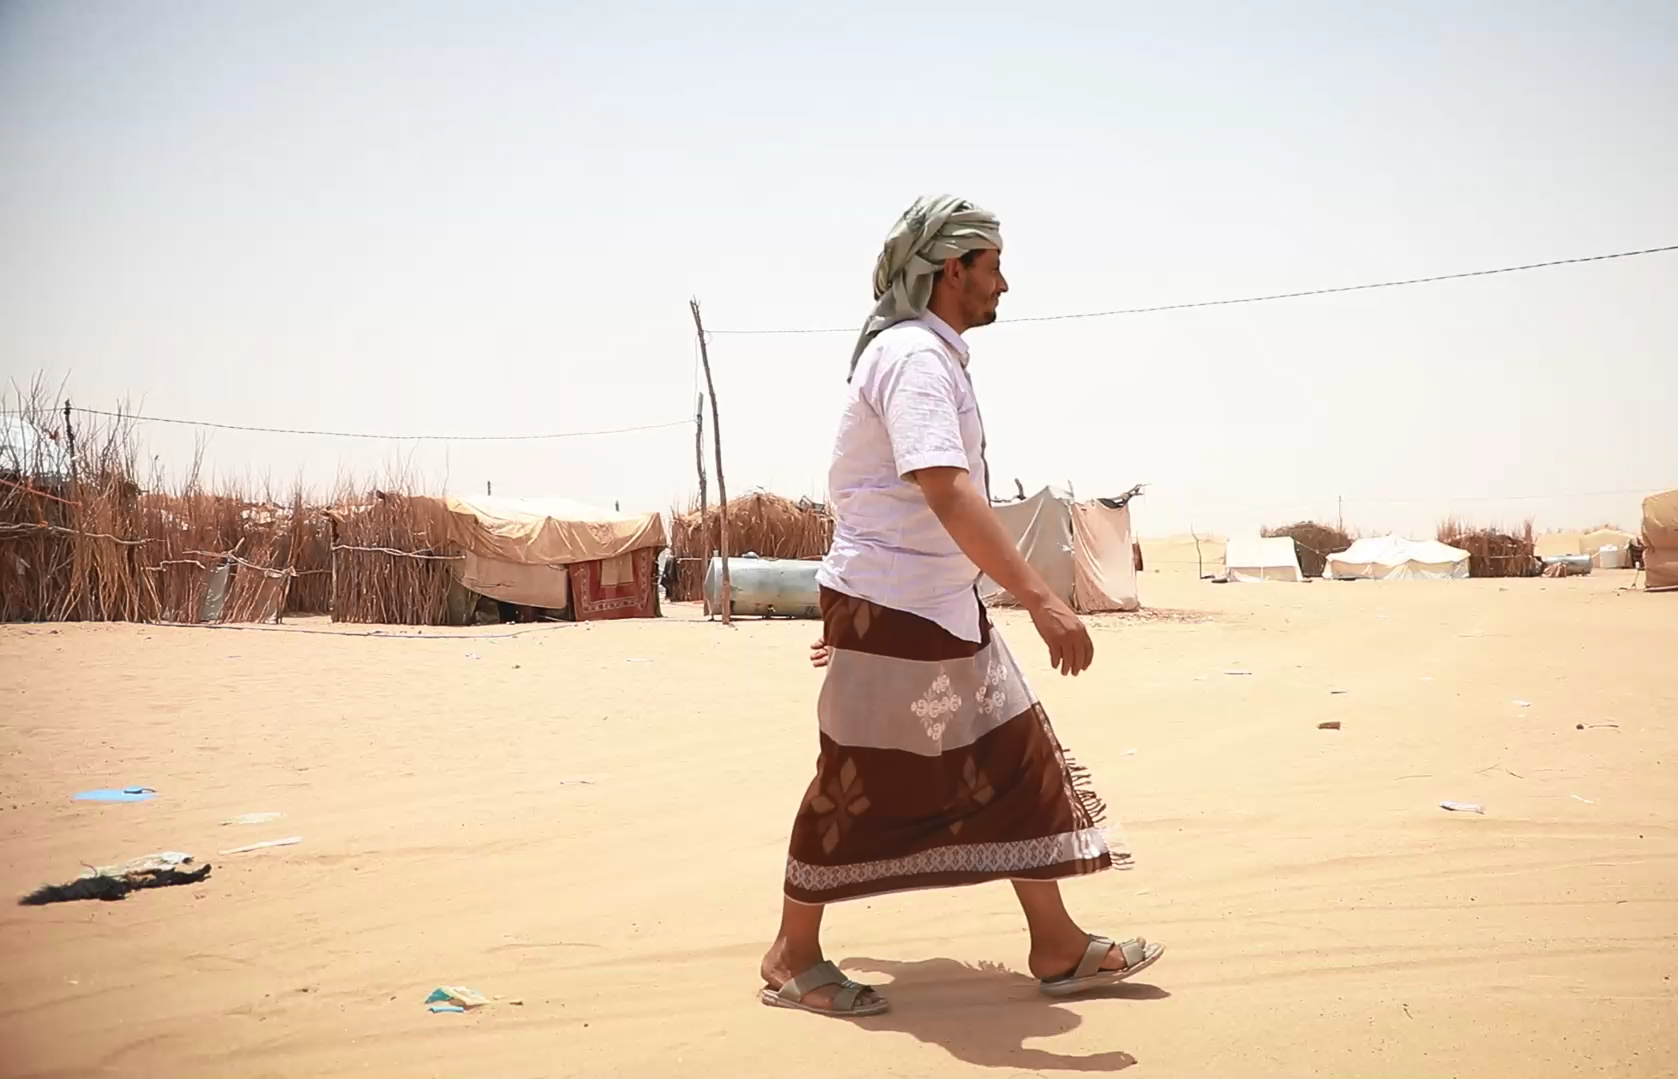 A man walking in the desert near a tent, under the scorching sun.